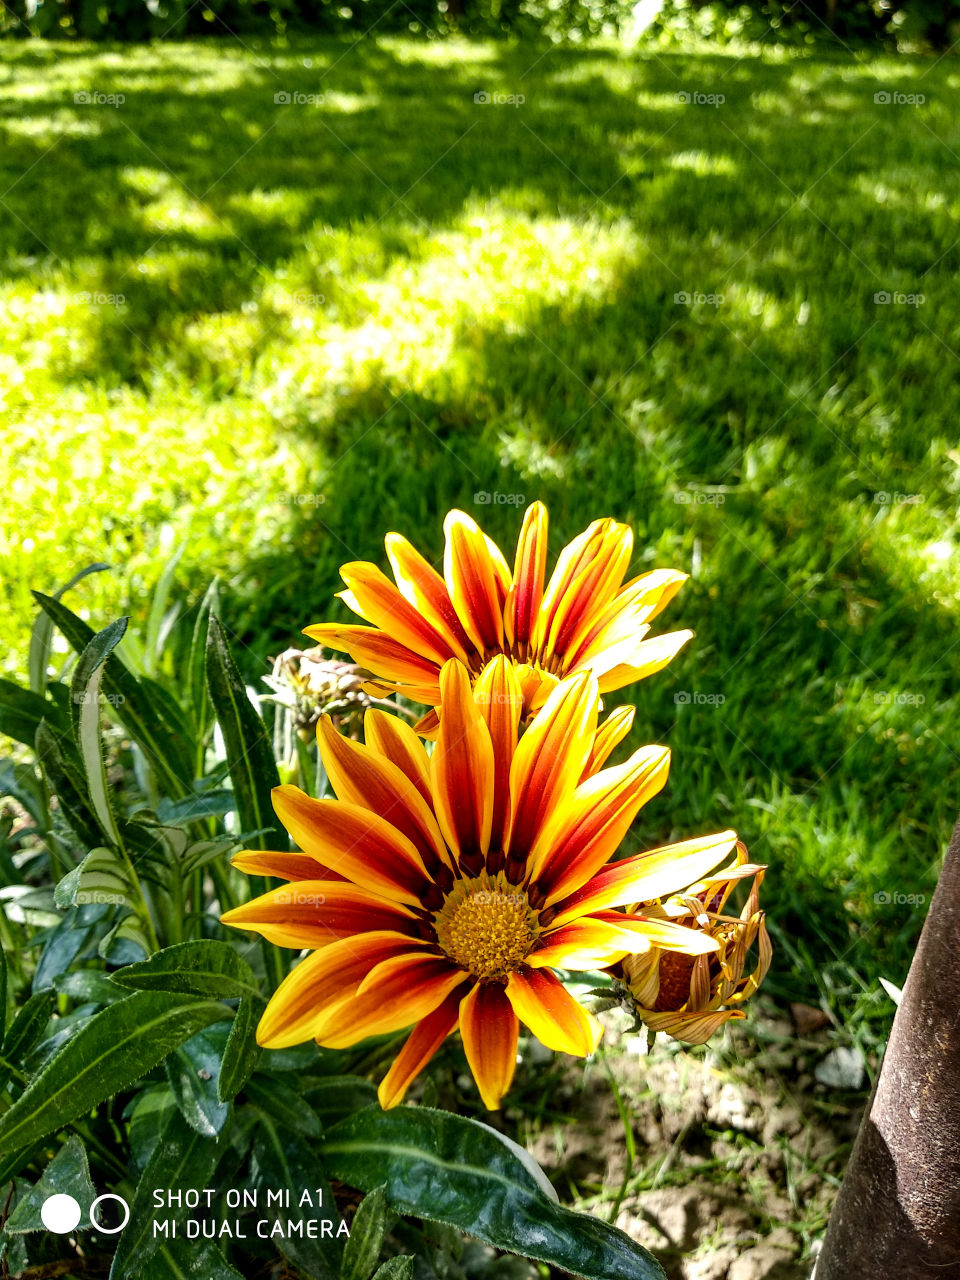 Flower in my yard